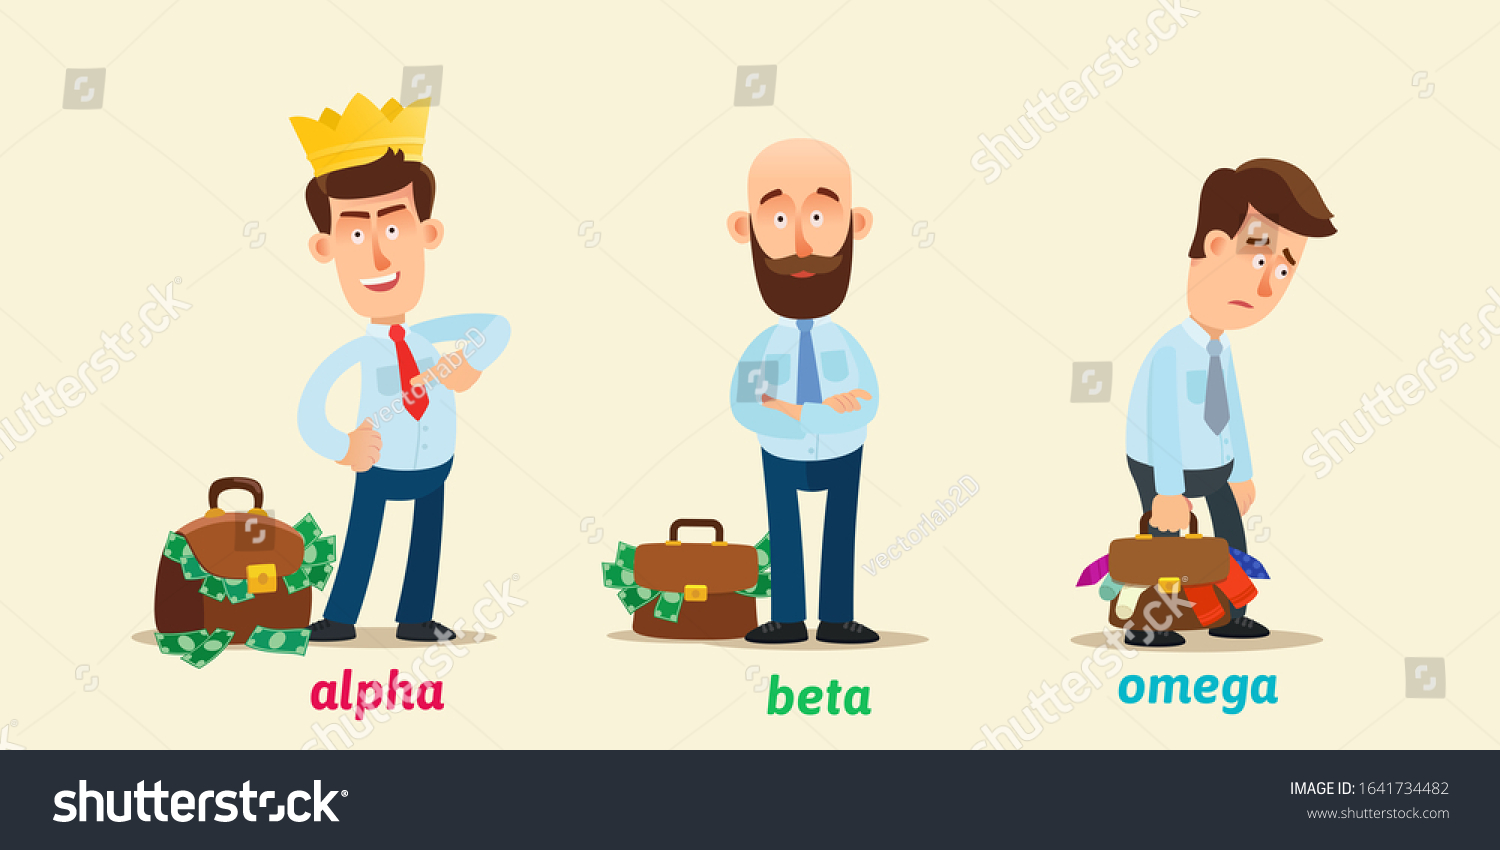 Hierarchy Men By Income Alpha Beta Stok Vektör Telifsiz 1641734482 Shutterstock 5545